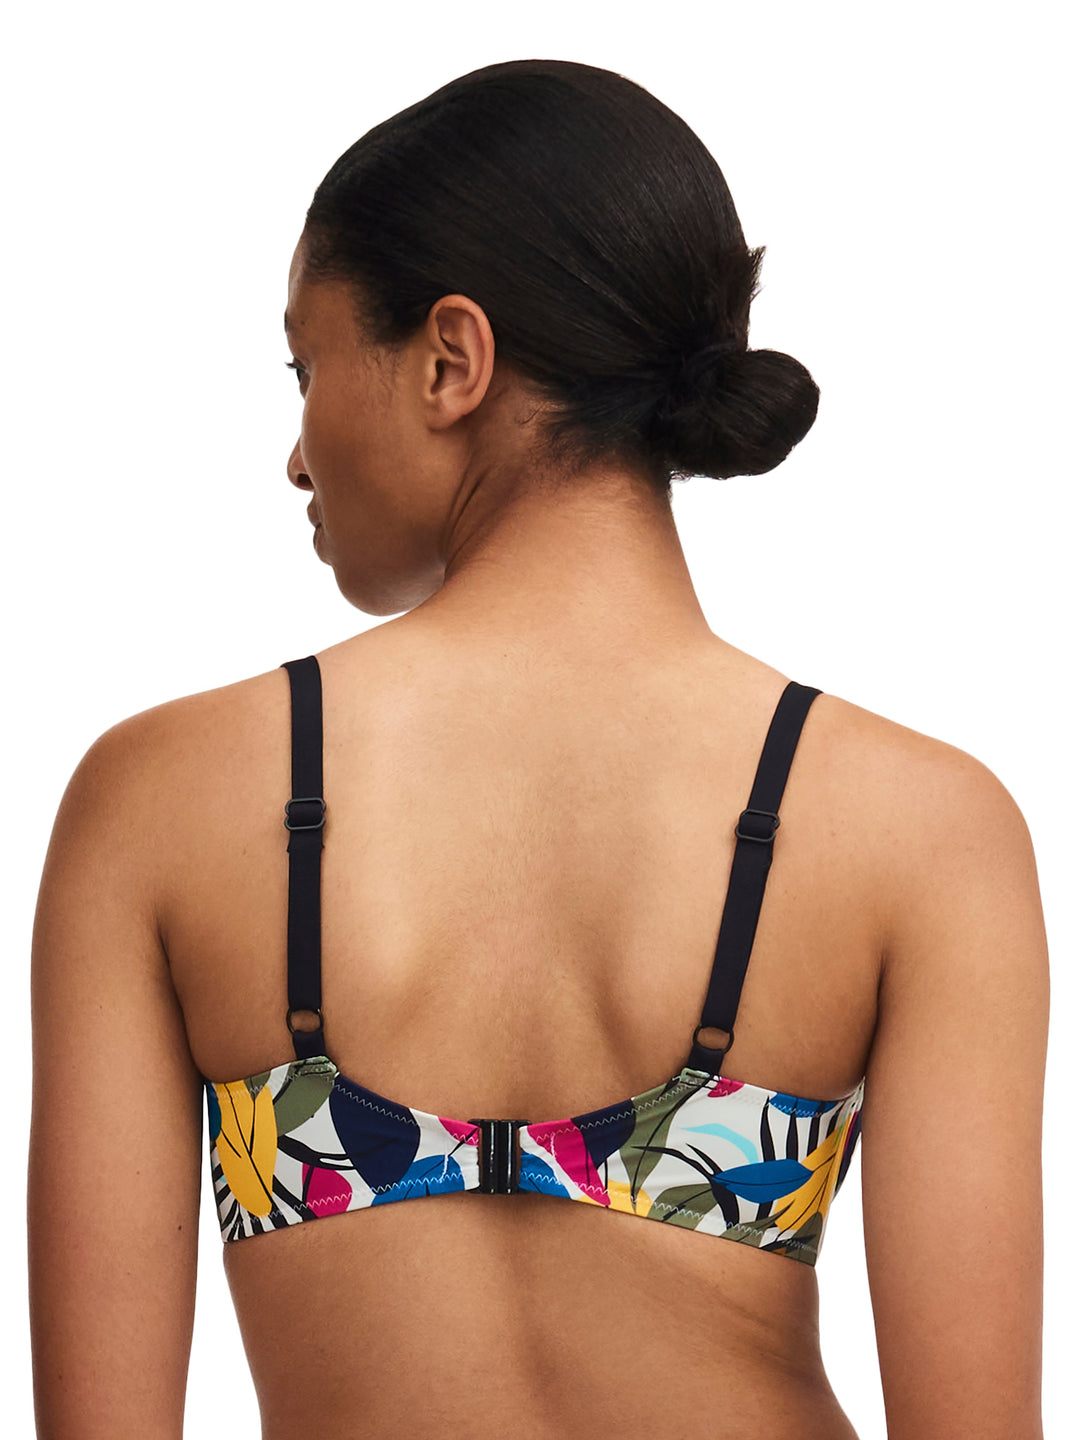 Femilet Swimwear - Honduras Covering Underwired Bikini (Adjustable) Multicolor Leaves Full Cup Bikini Femilet Swimwear 